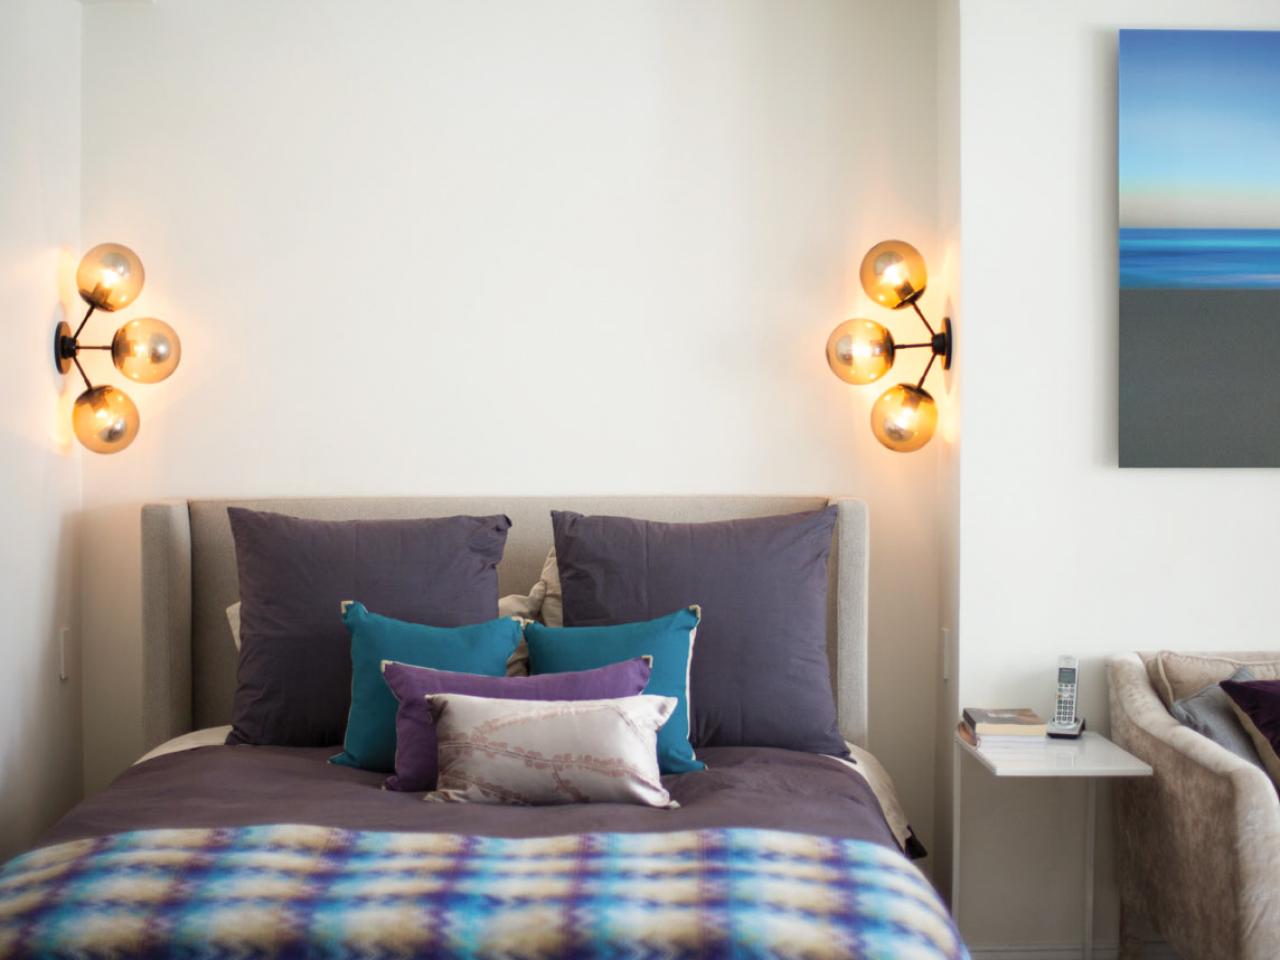 14 Ideas For Small Bedroom Decor Hgtv S Decorating Design Blog Hgtv,Interior Design Competition Board